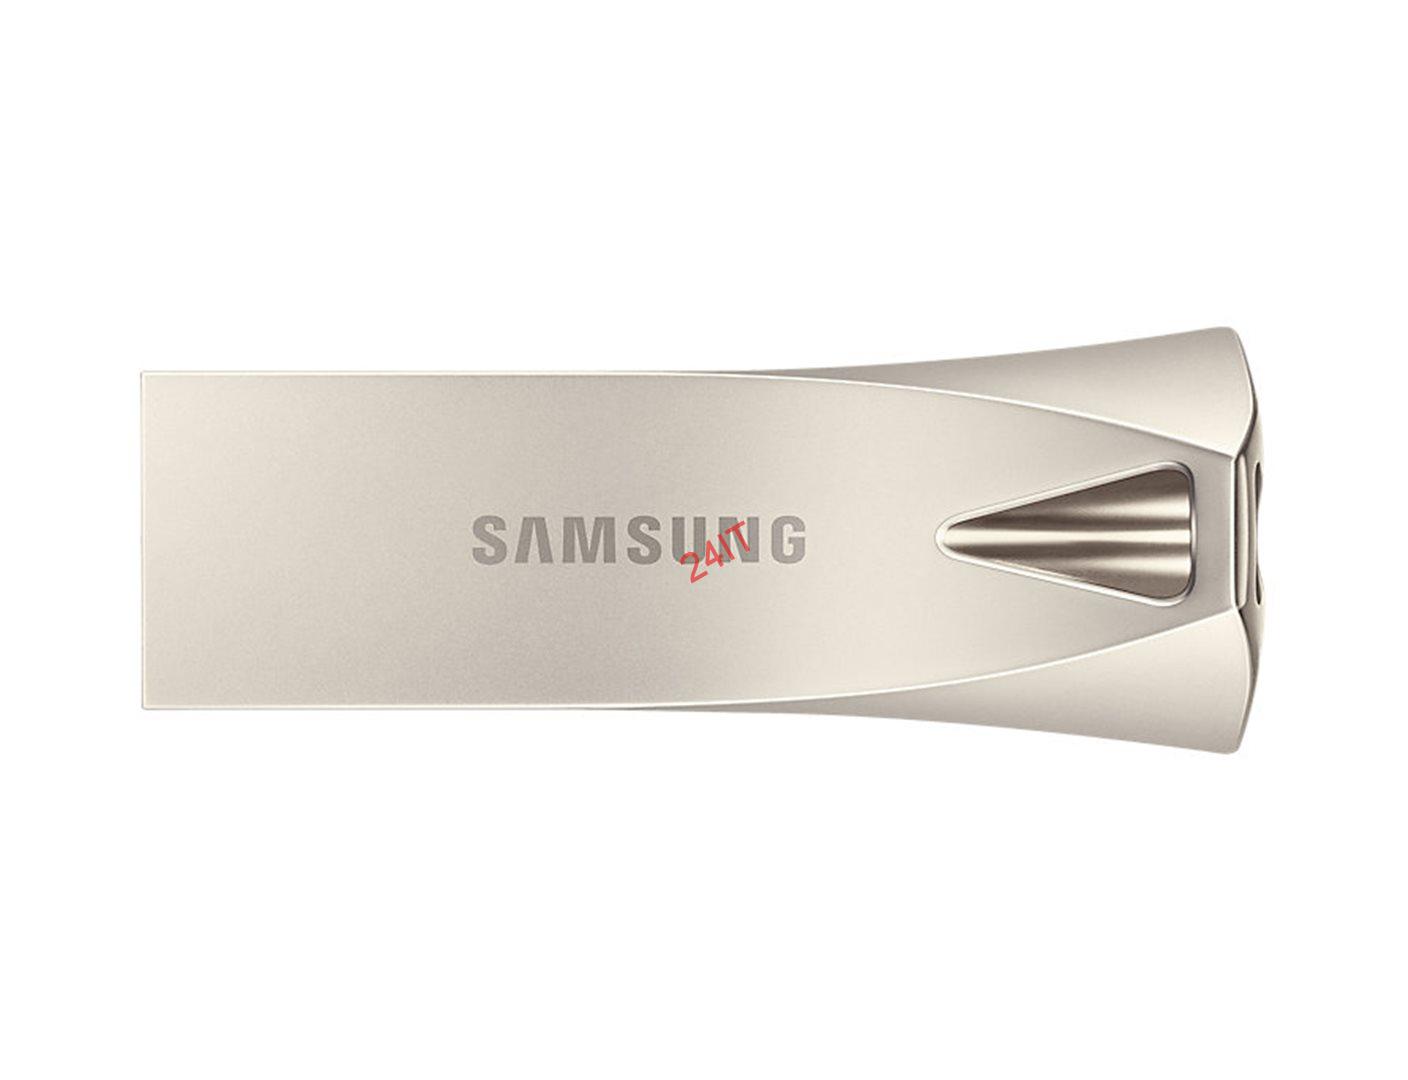 SAMSUNG 256GB USB 3.1 Champagne Silver (čtení až 400MB/s)